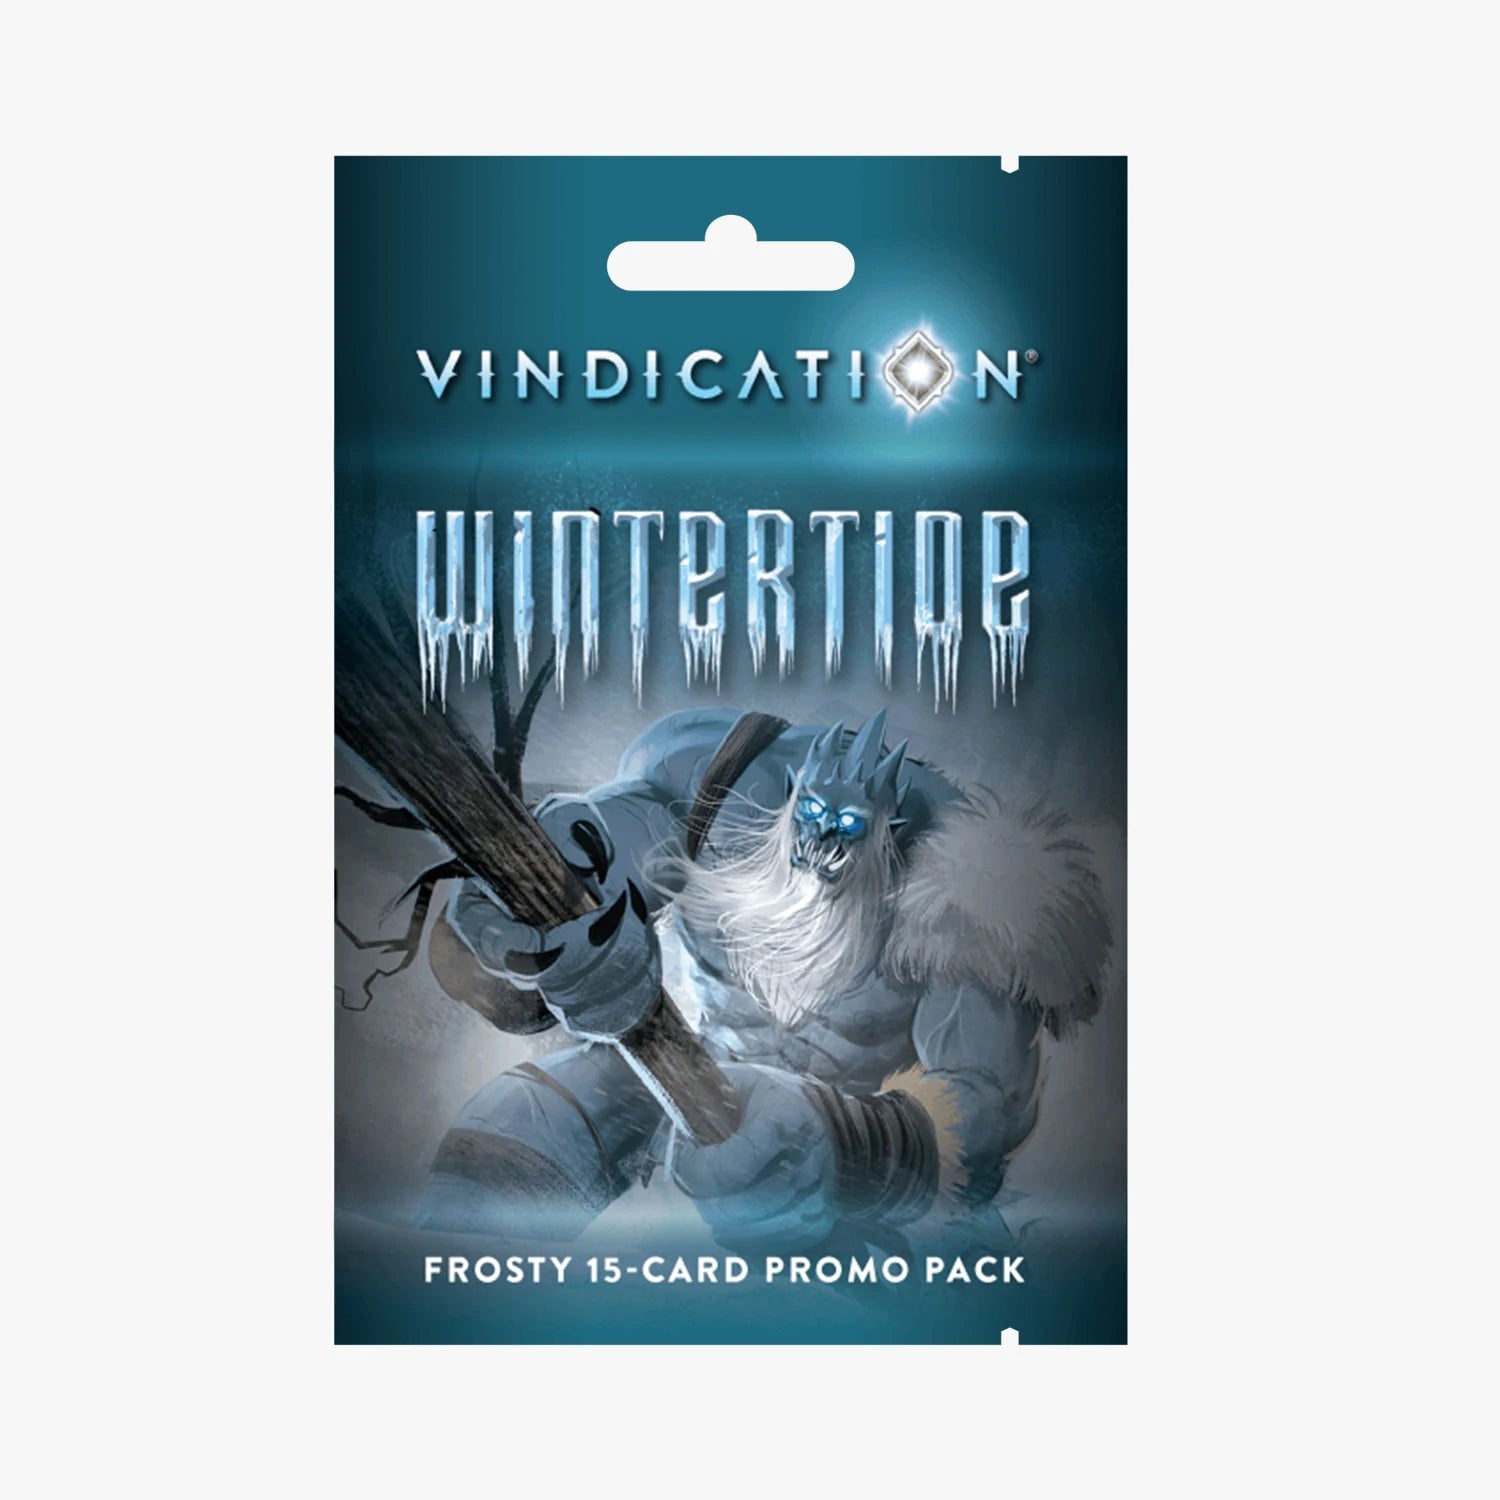 Vindication® Wintertide Card Pack